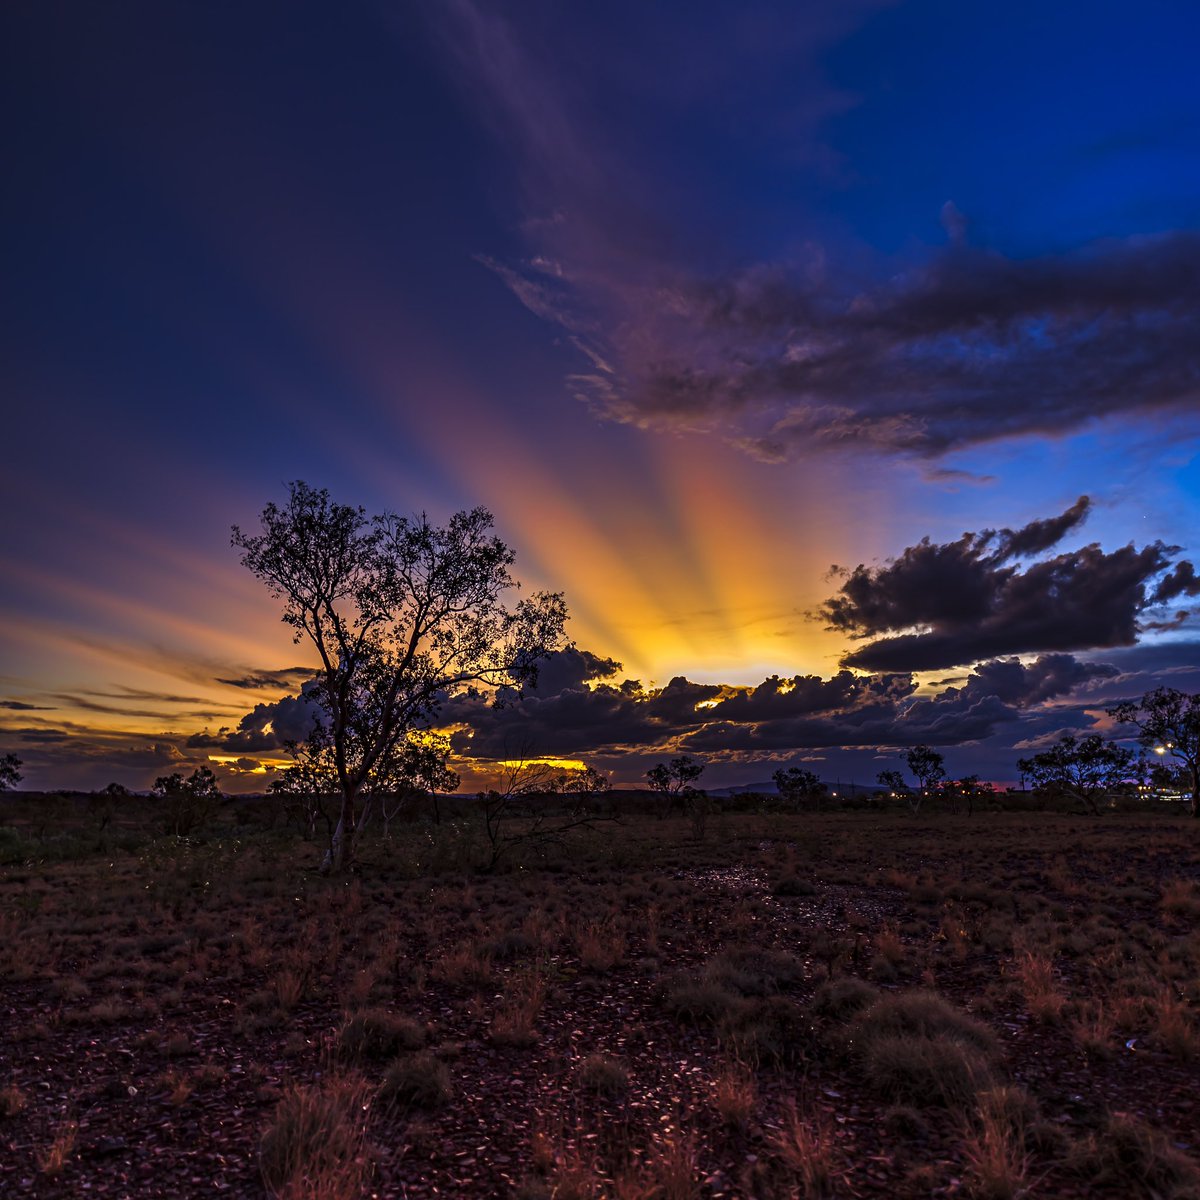 Sunset lazers, what’s an epic show this was.

#sunsets #landscapephotography #photography #pilbara #desert #colour #clouds #canonaustralia #nisifiltersanz #gothere #kuhl #shimodadesigns #sandiskapac #3leggedthing #raw_community #elitepix #naturegang